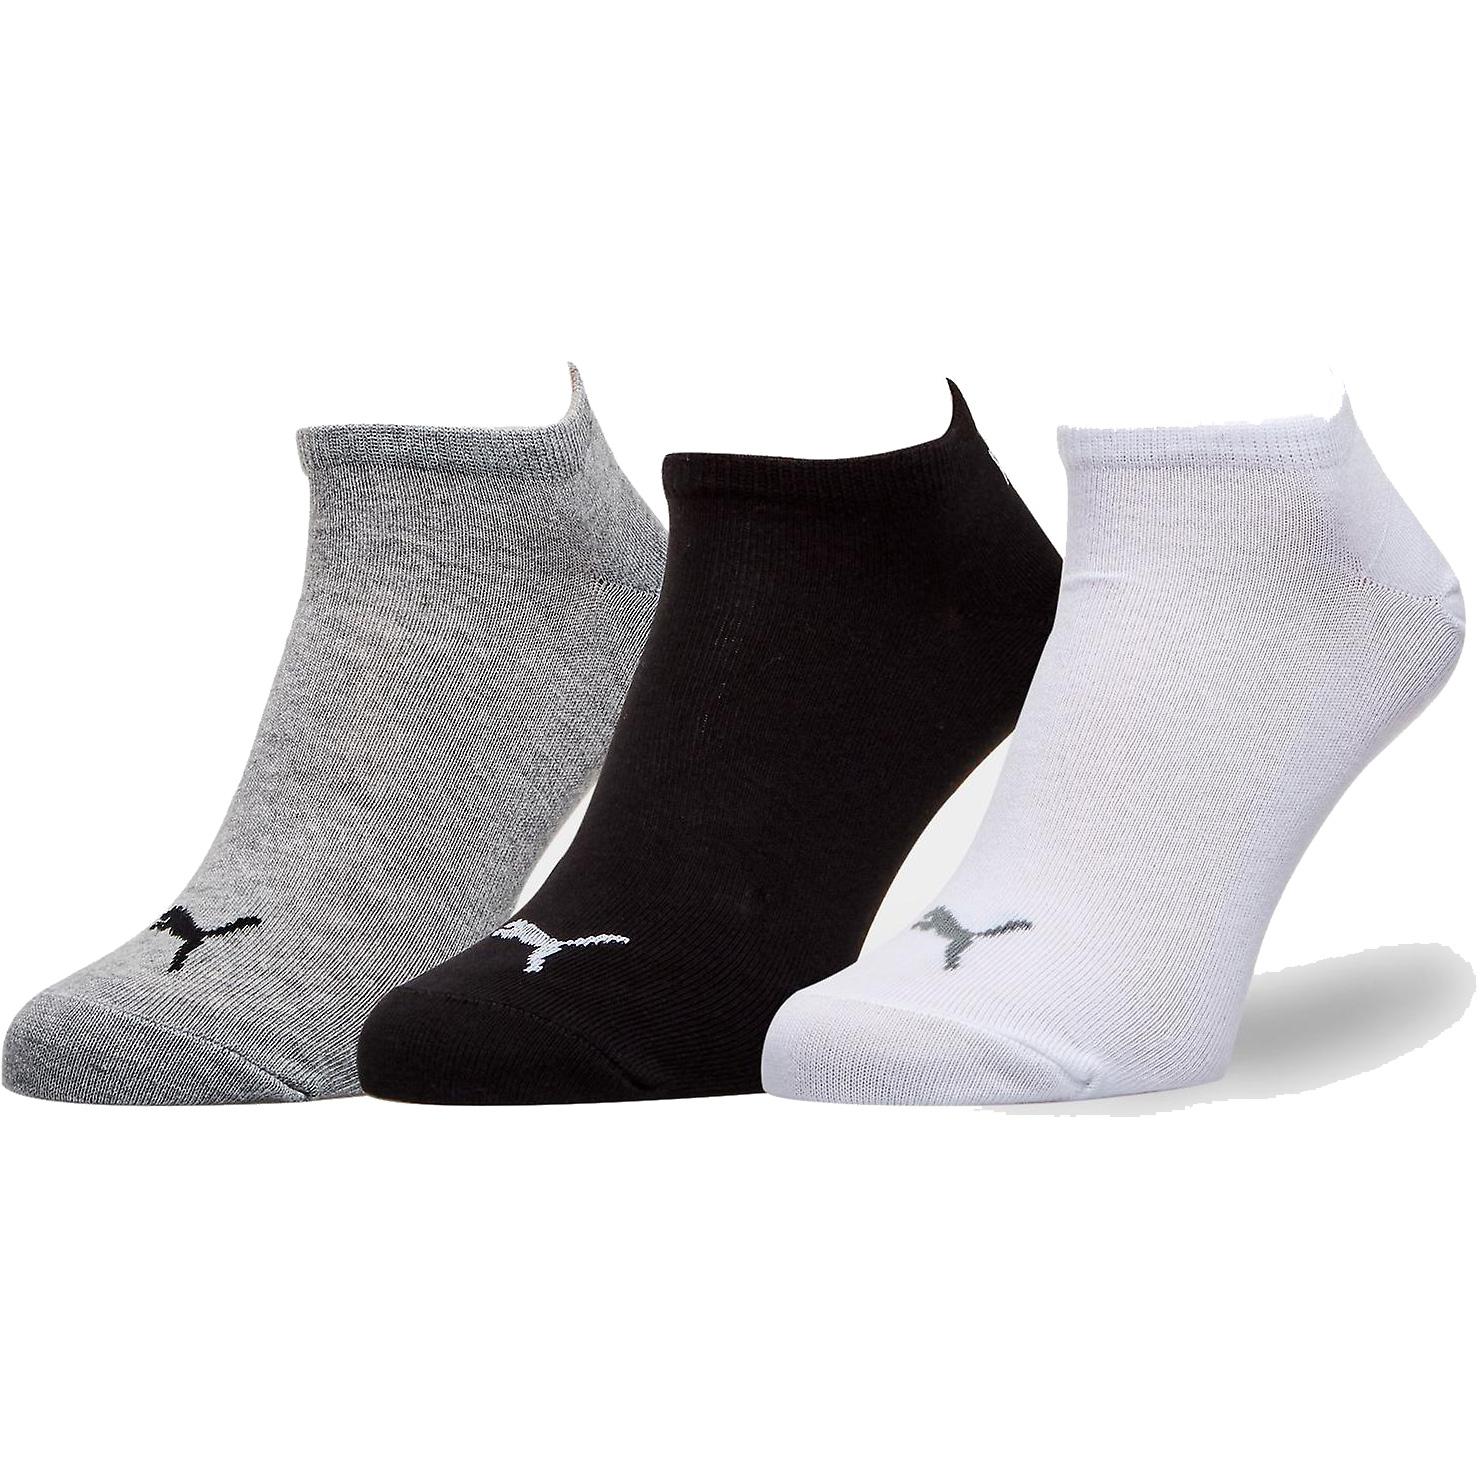 Puma Sneaker Socks (3 Pairs) - Black/White/Grey - Tennisnuts.com